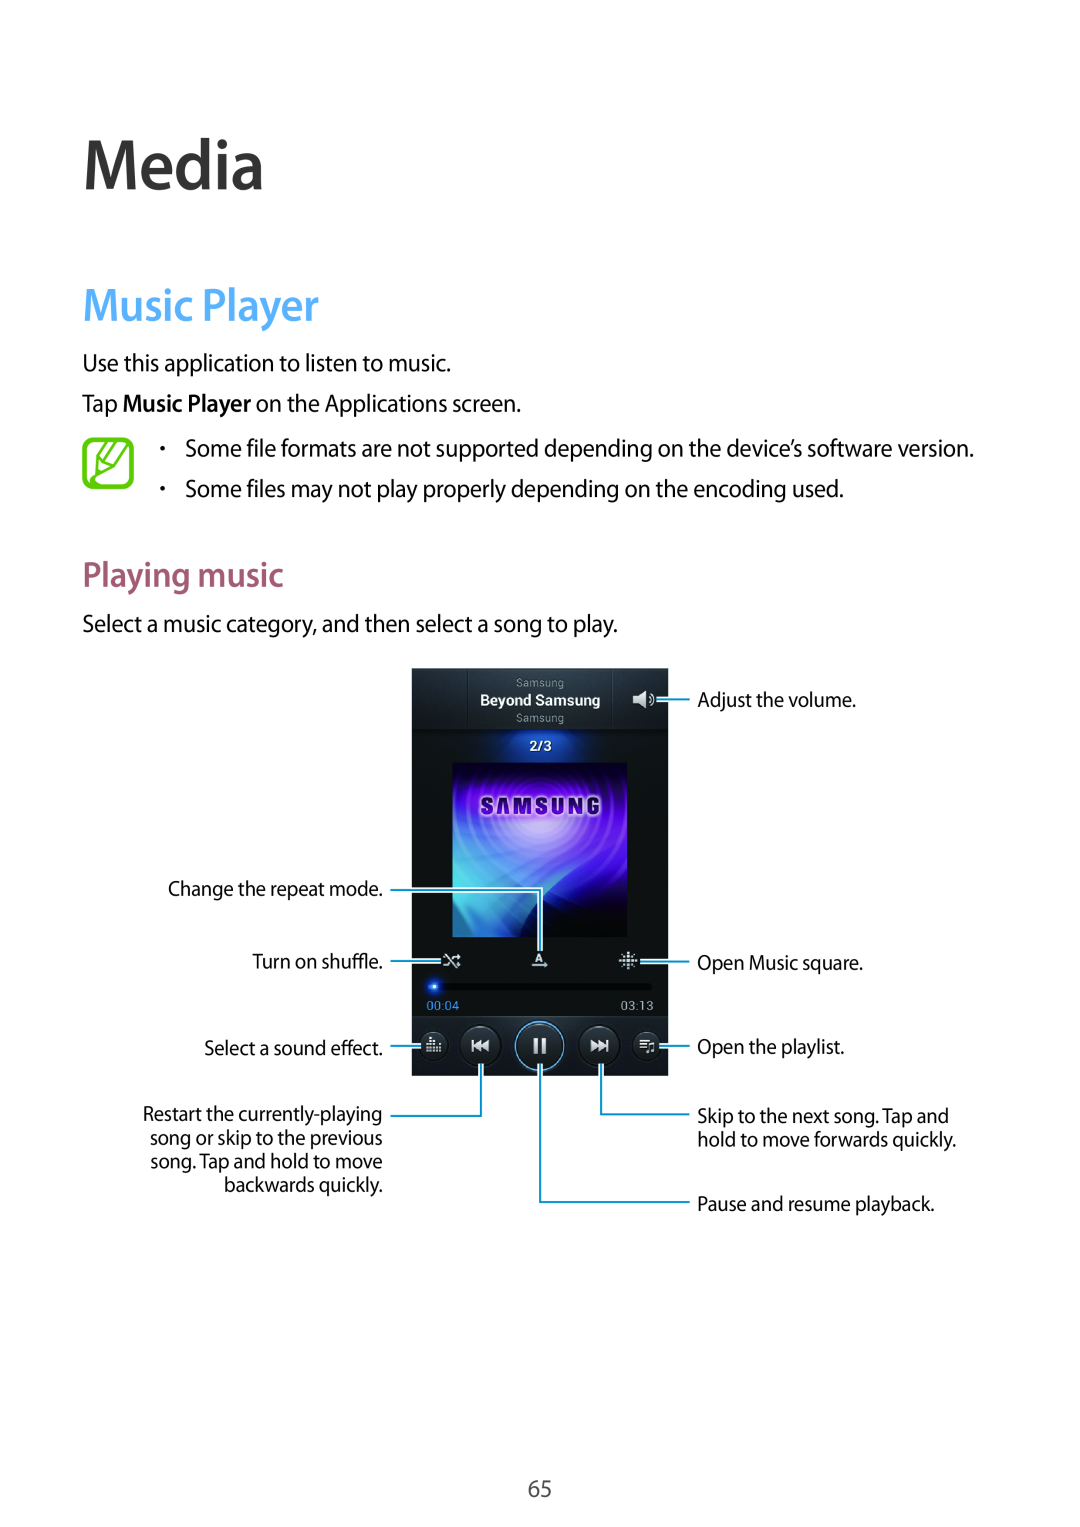 Samsung GT-I8730ZWAVD2 manual Media, Music Player, Playing music, Adjust the volume, Turn on shu e, Open Music square 